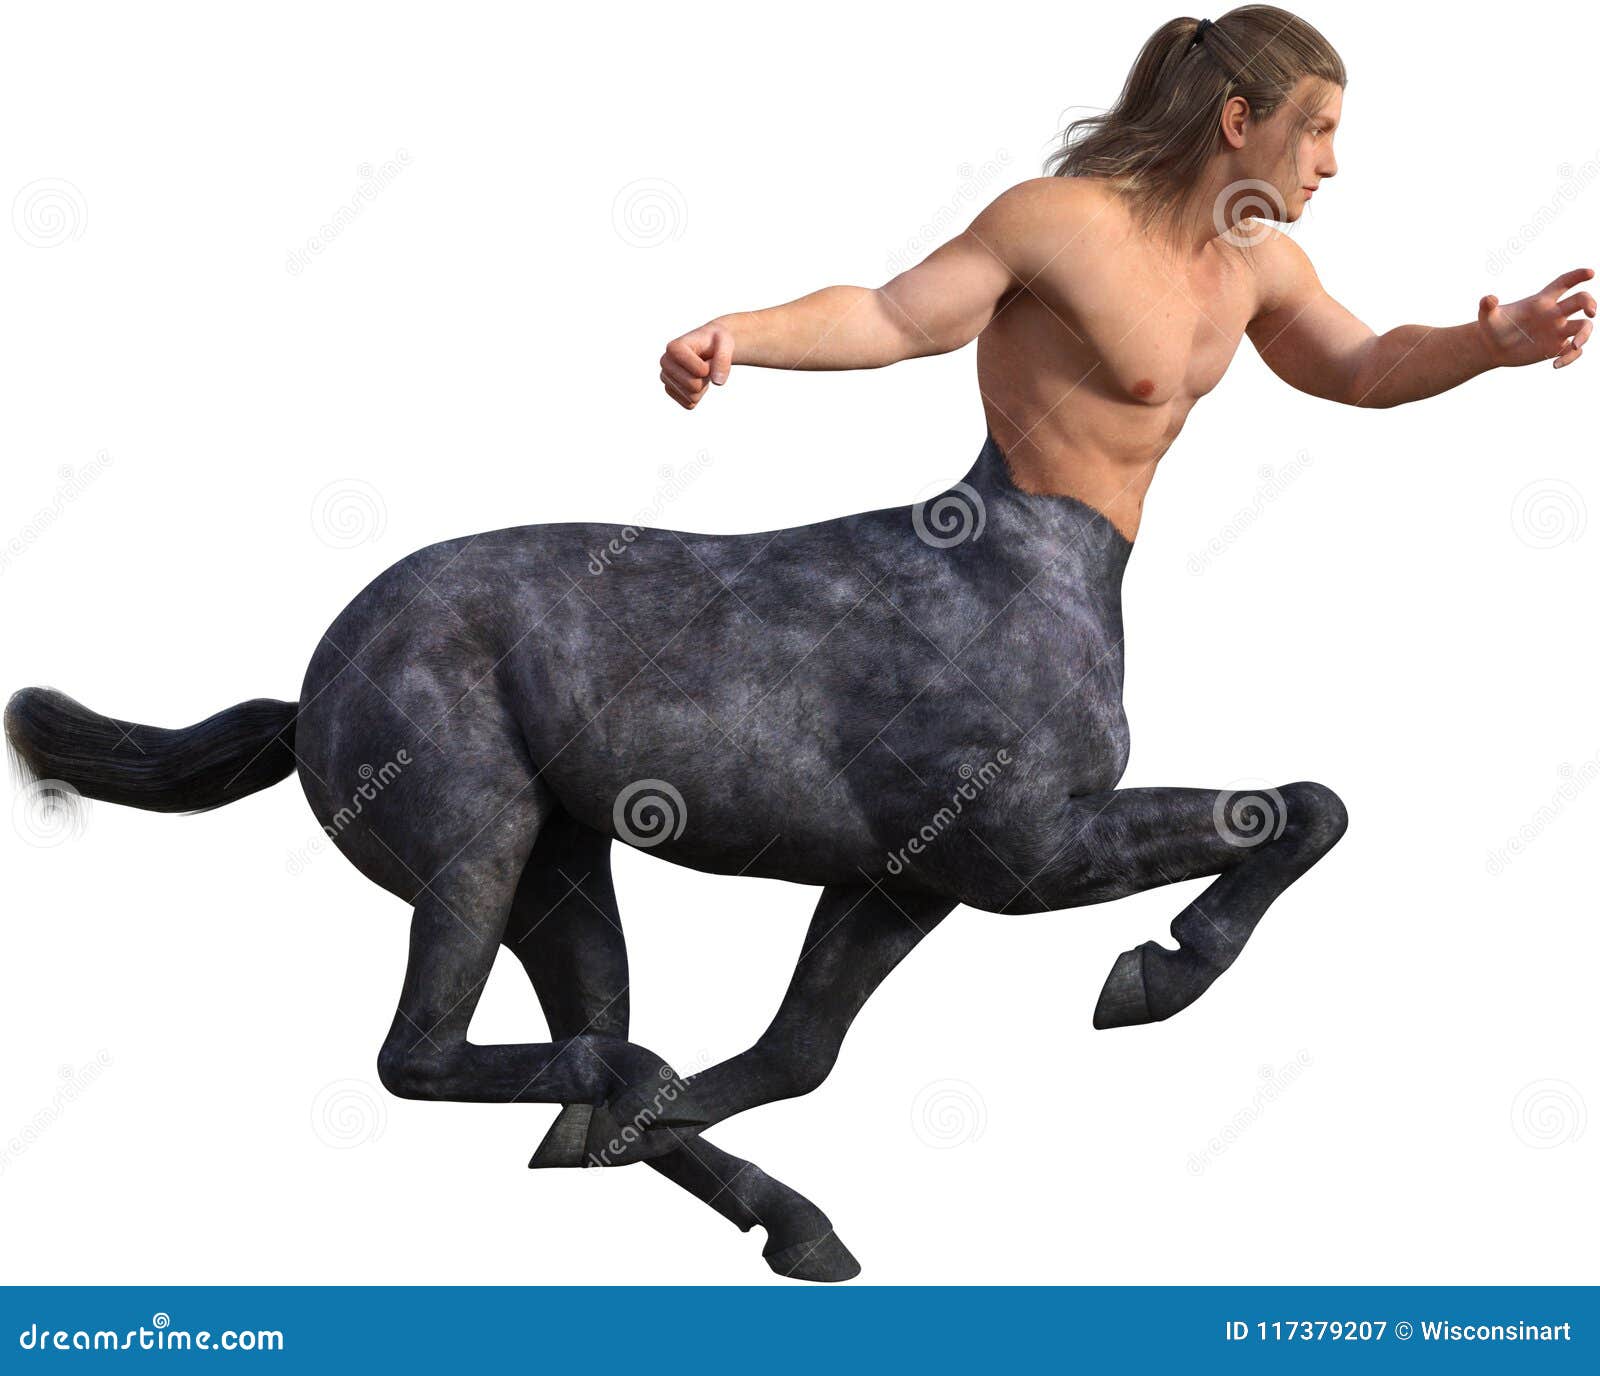 centaur, half man, horse, 